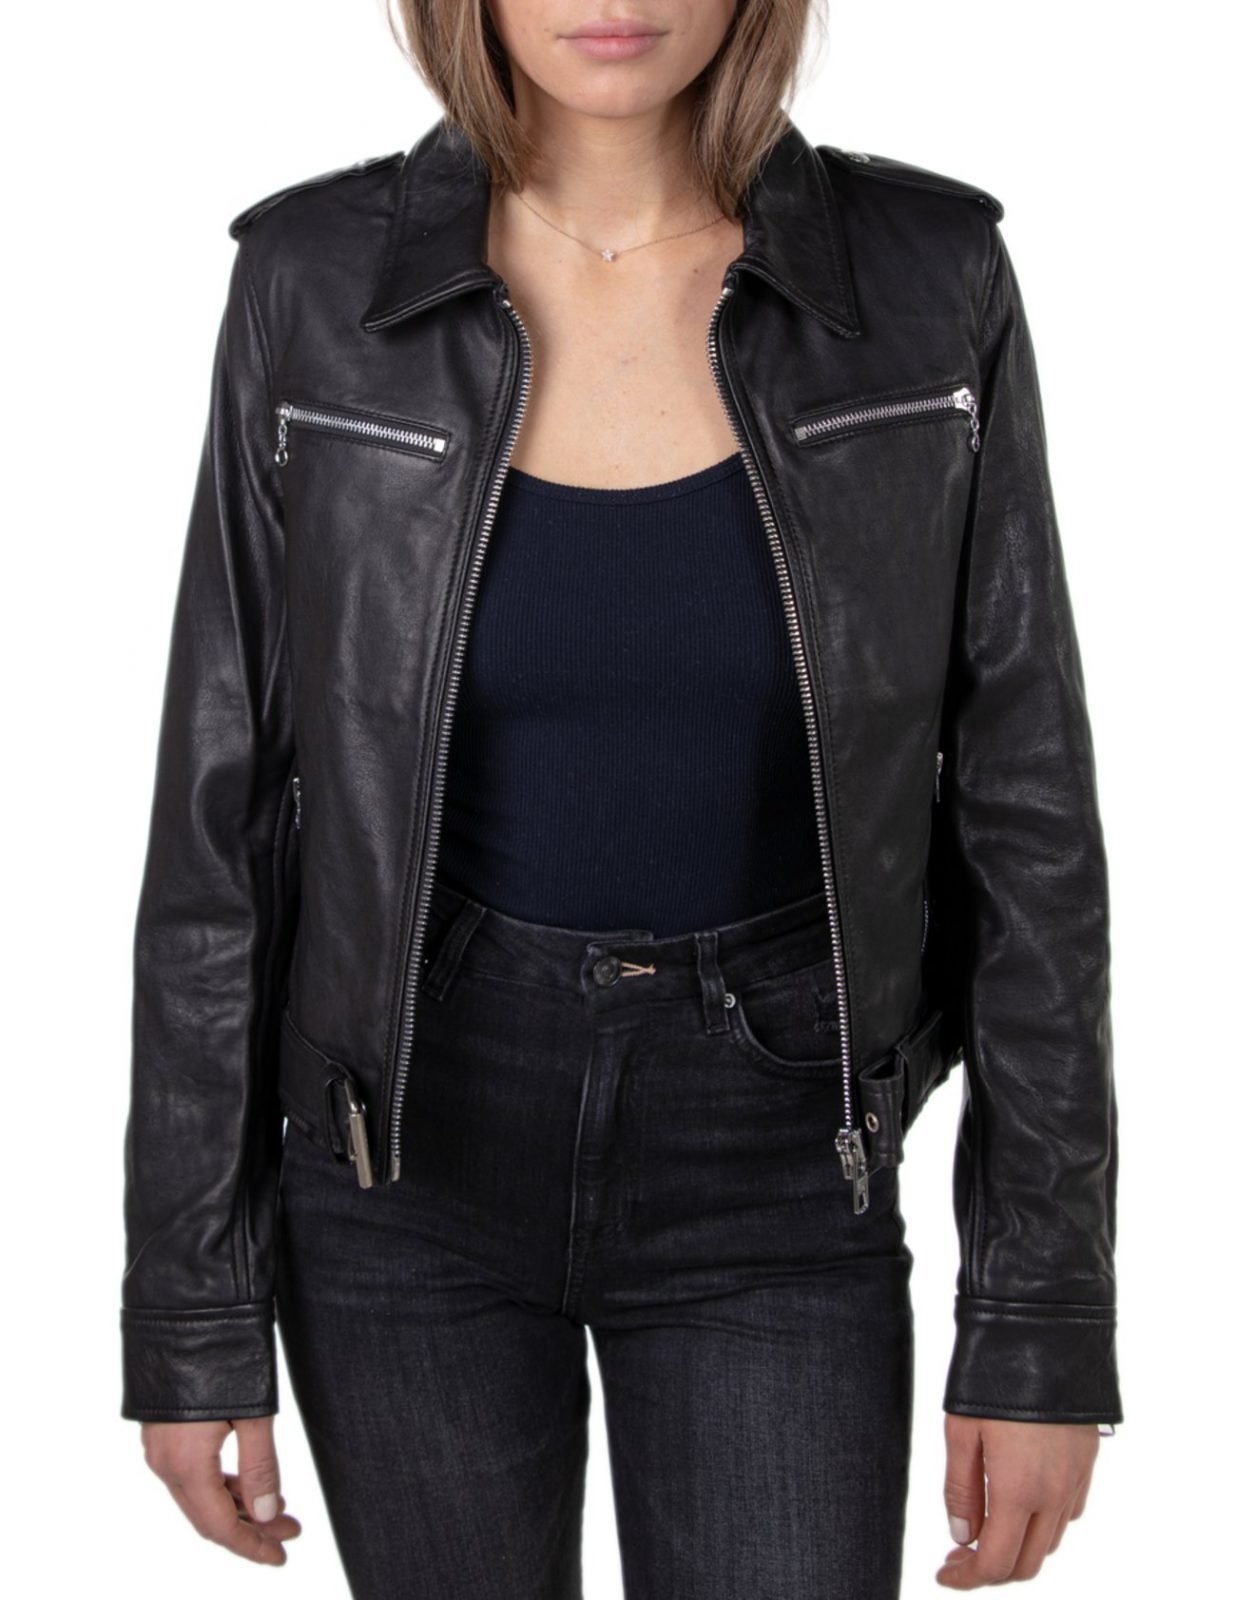 Ovia Sheep Leather Jacket | Best Quality Genuine Leather Jackets for ...